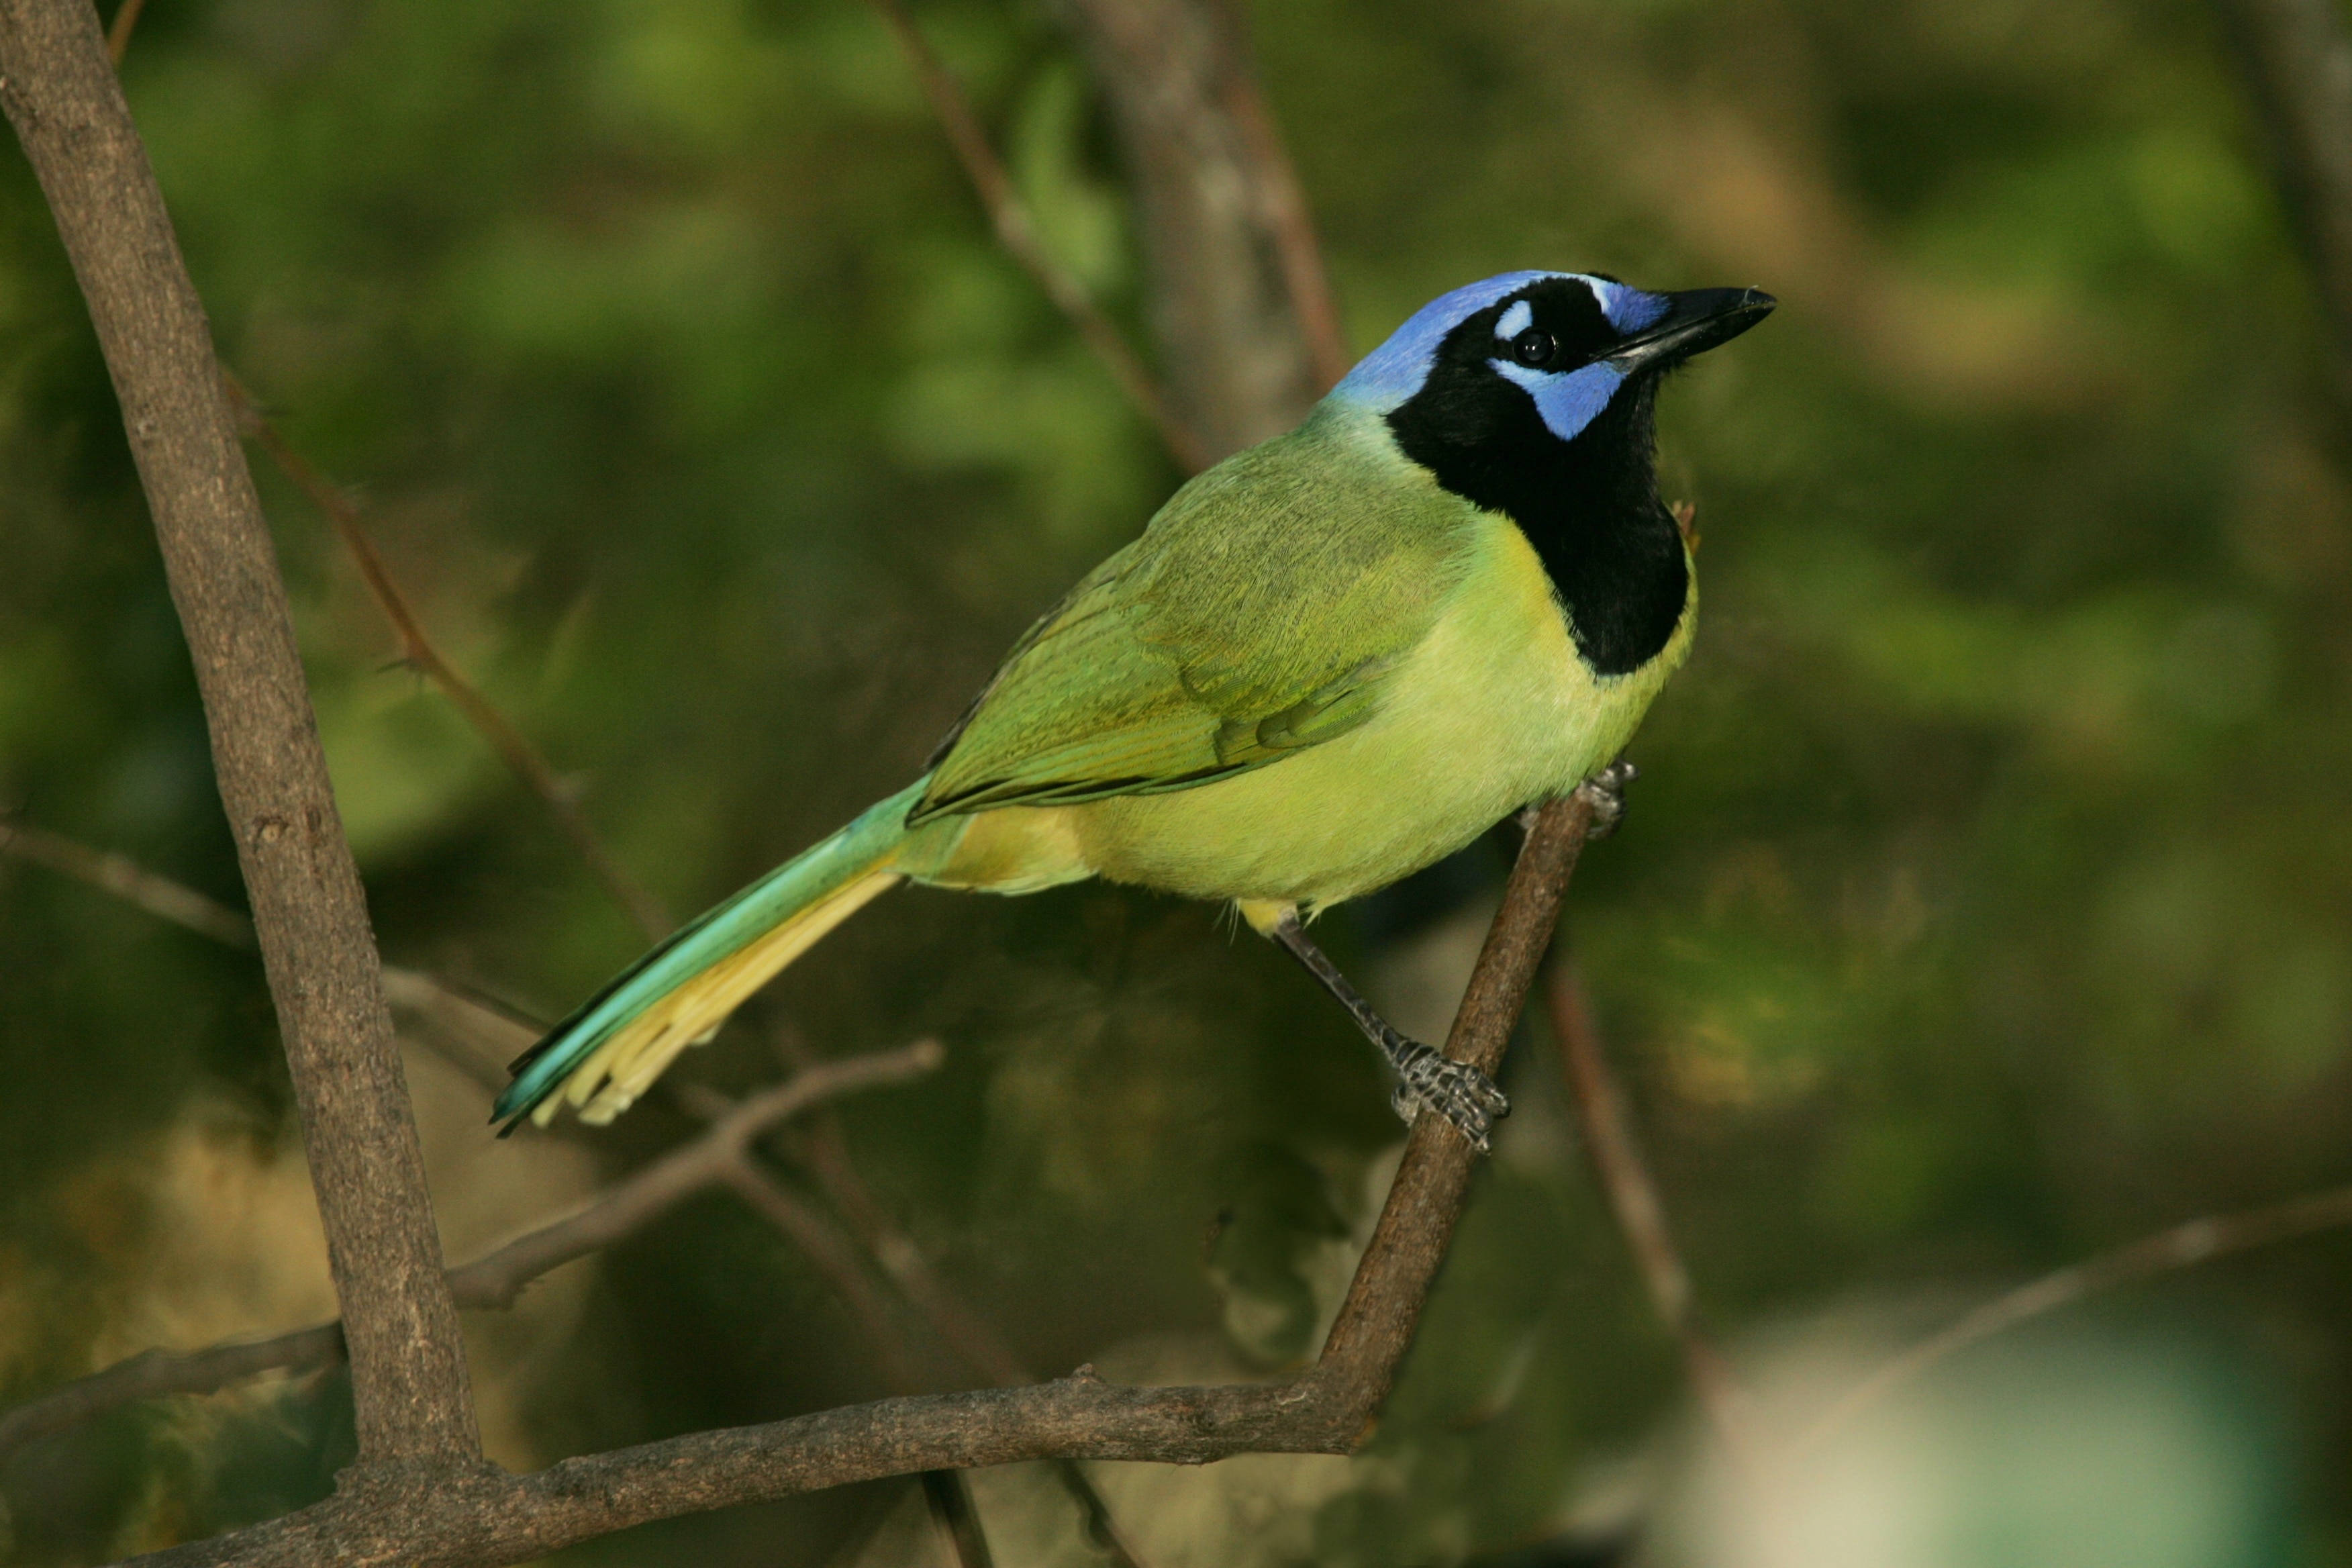 green, black and blue short beak bird on branch